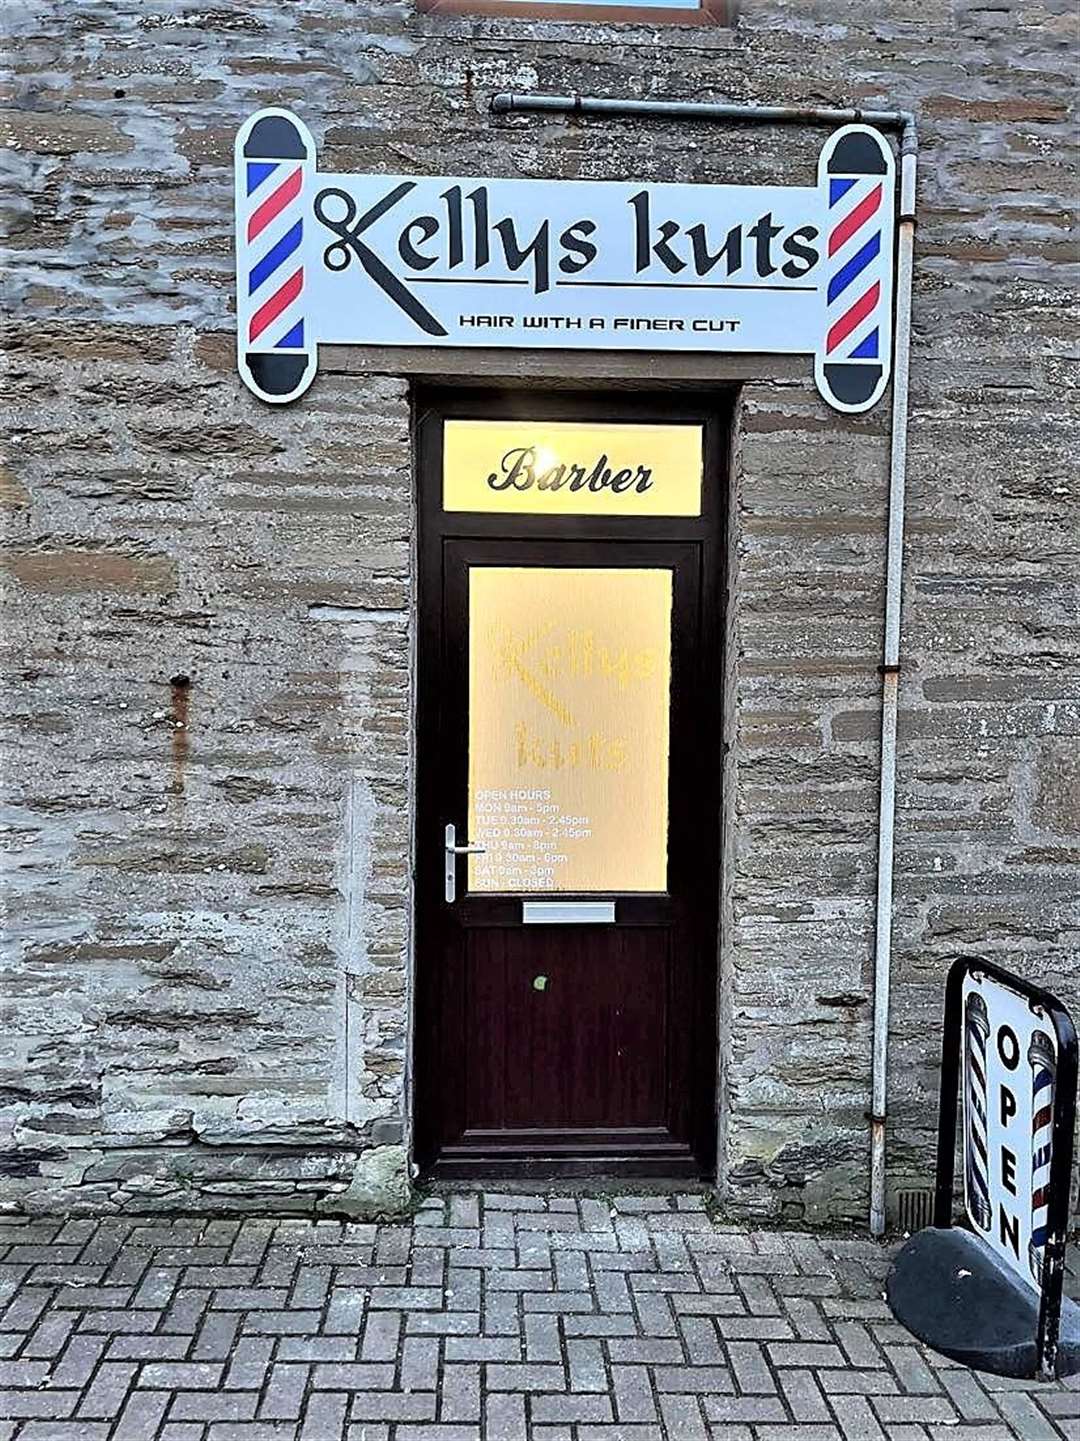 Kelly's Kuts on Sinclair Street in Thurso.